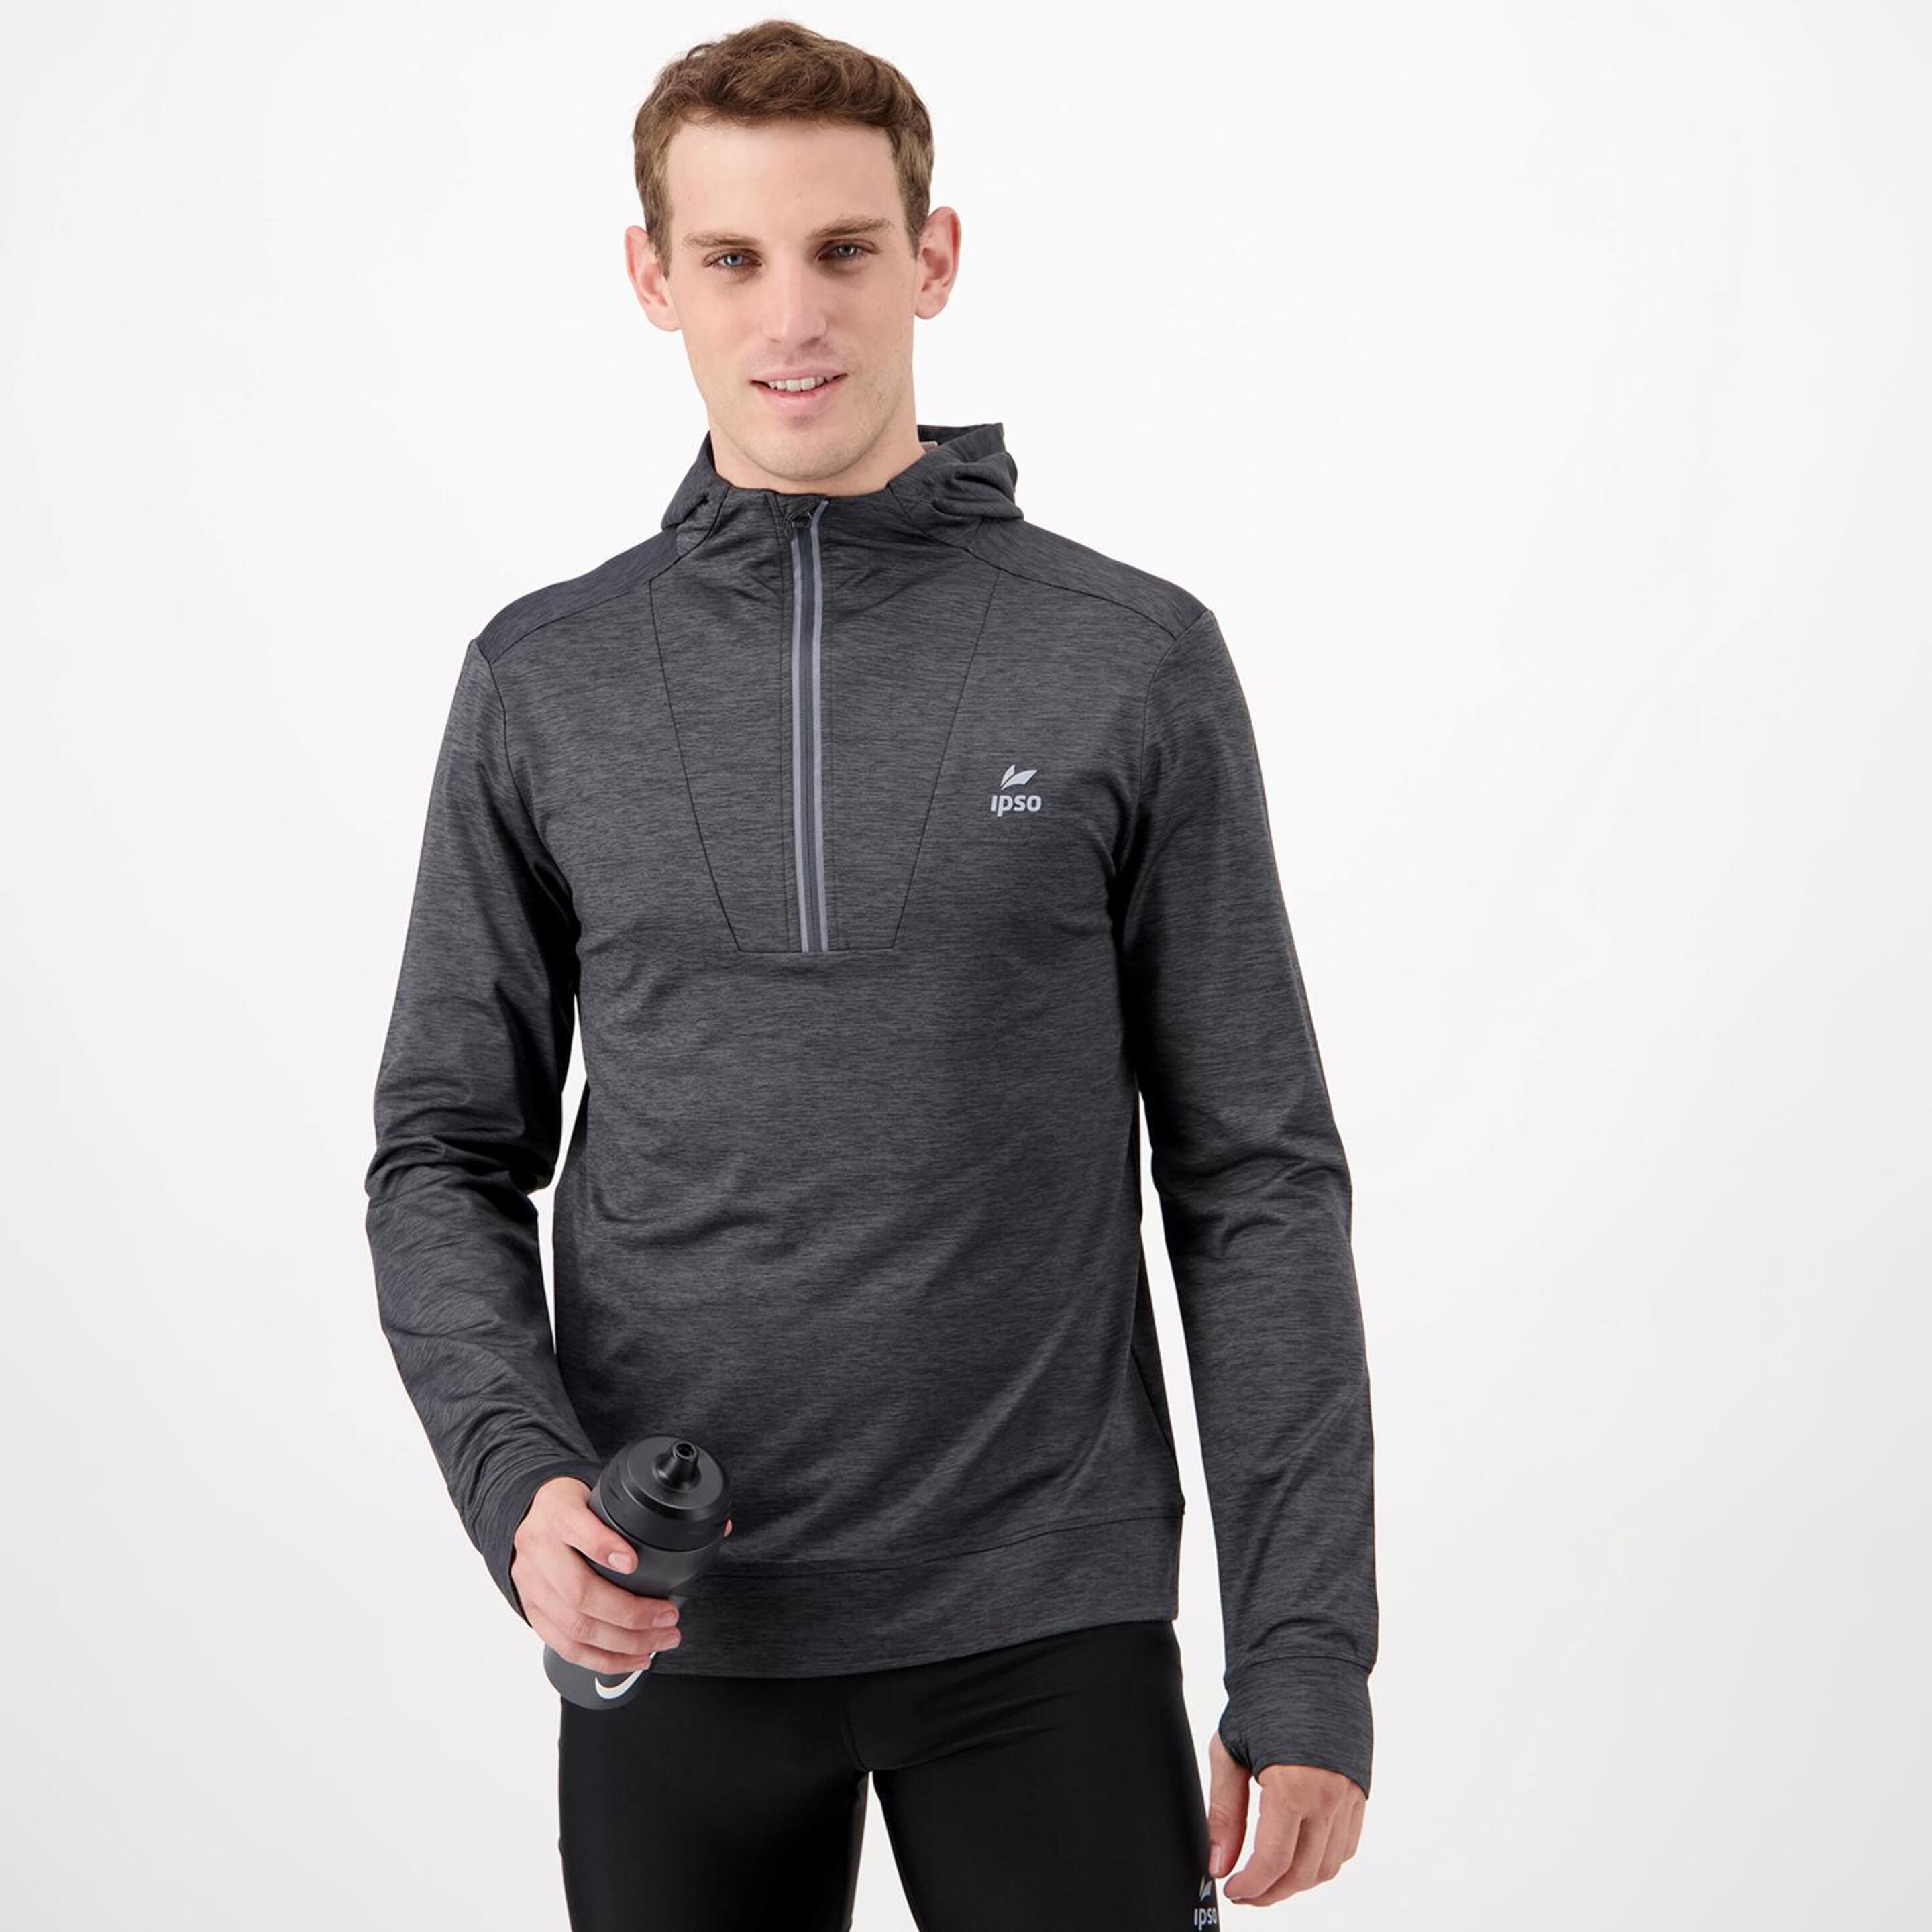 Ipso Combi - gris - Sweatshirt Running Homem